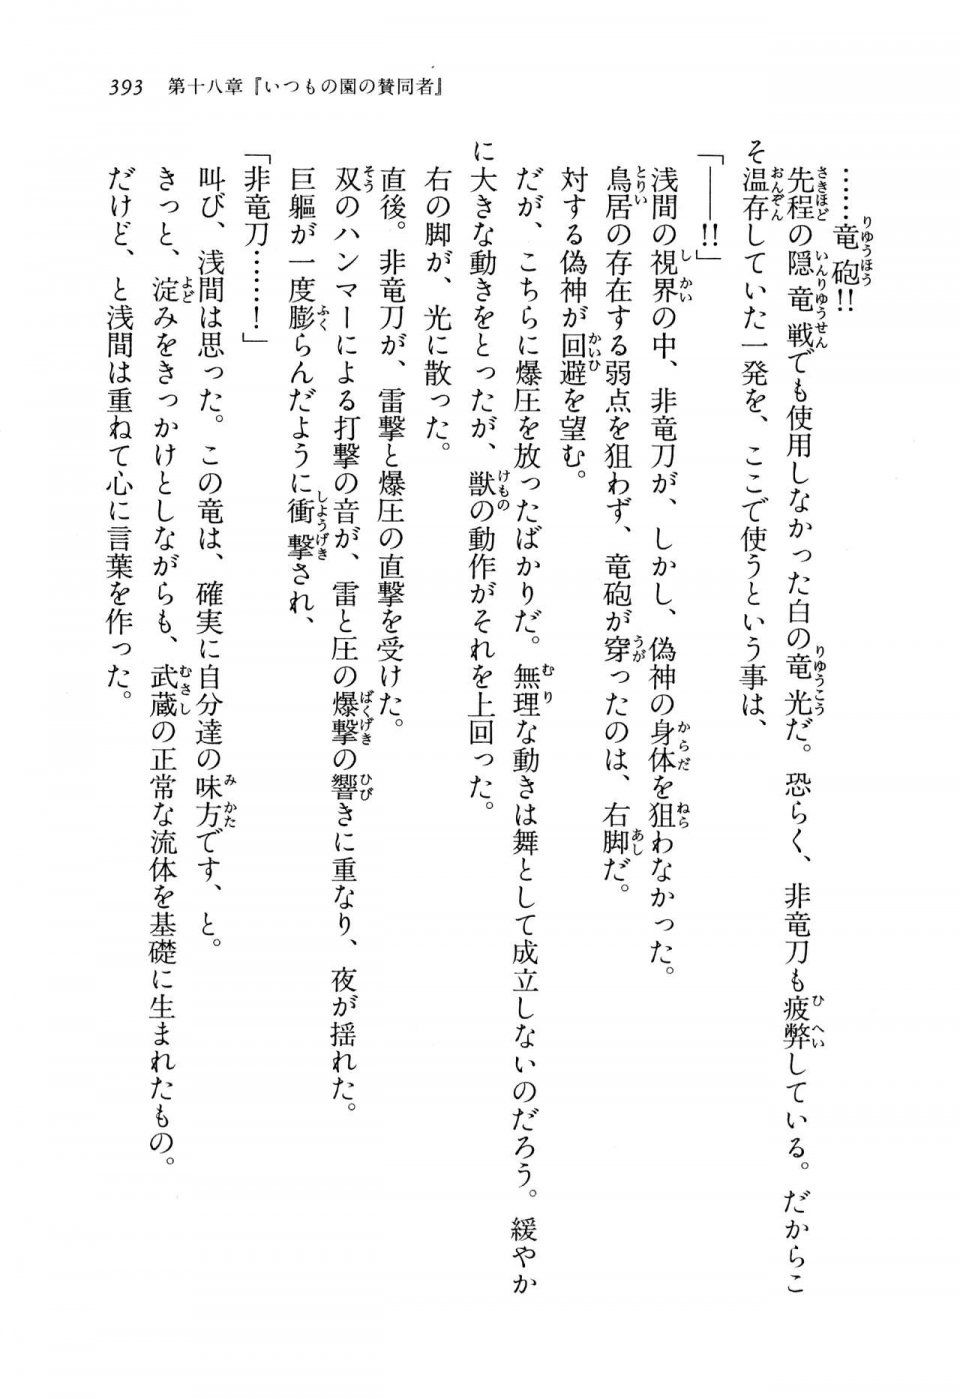 Kyoukai Senjou no Horizon BD Special Mininovel Vol 8(4B) - Photo #397